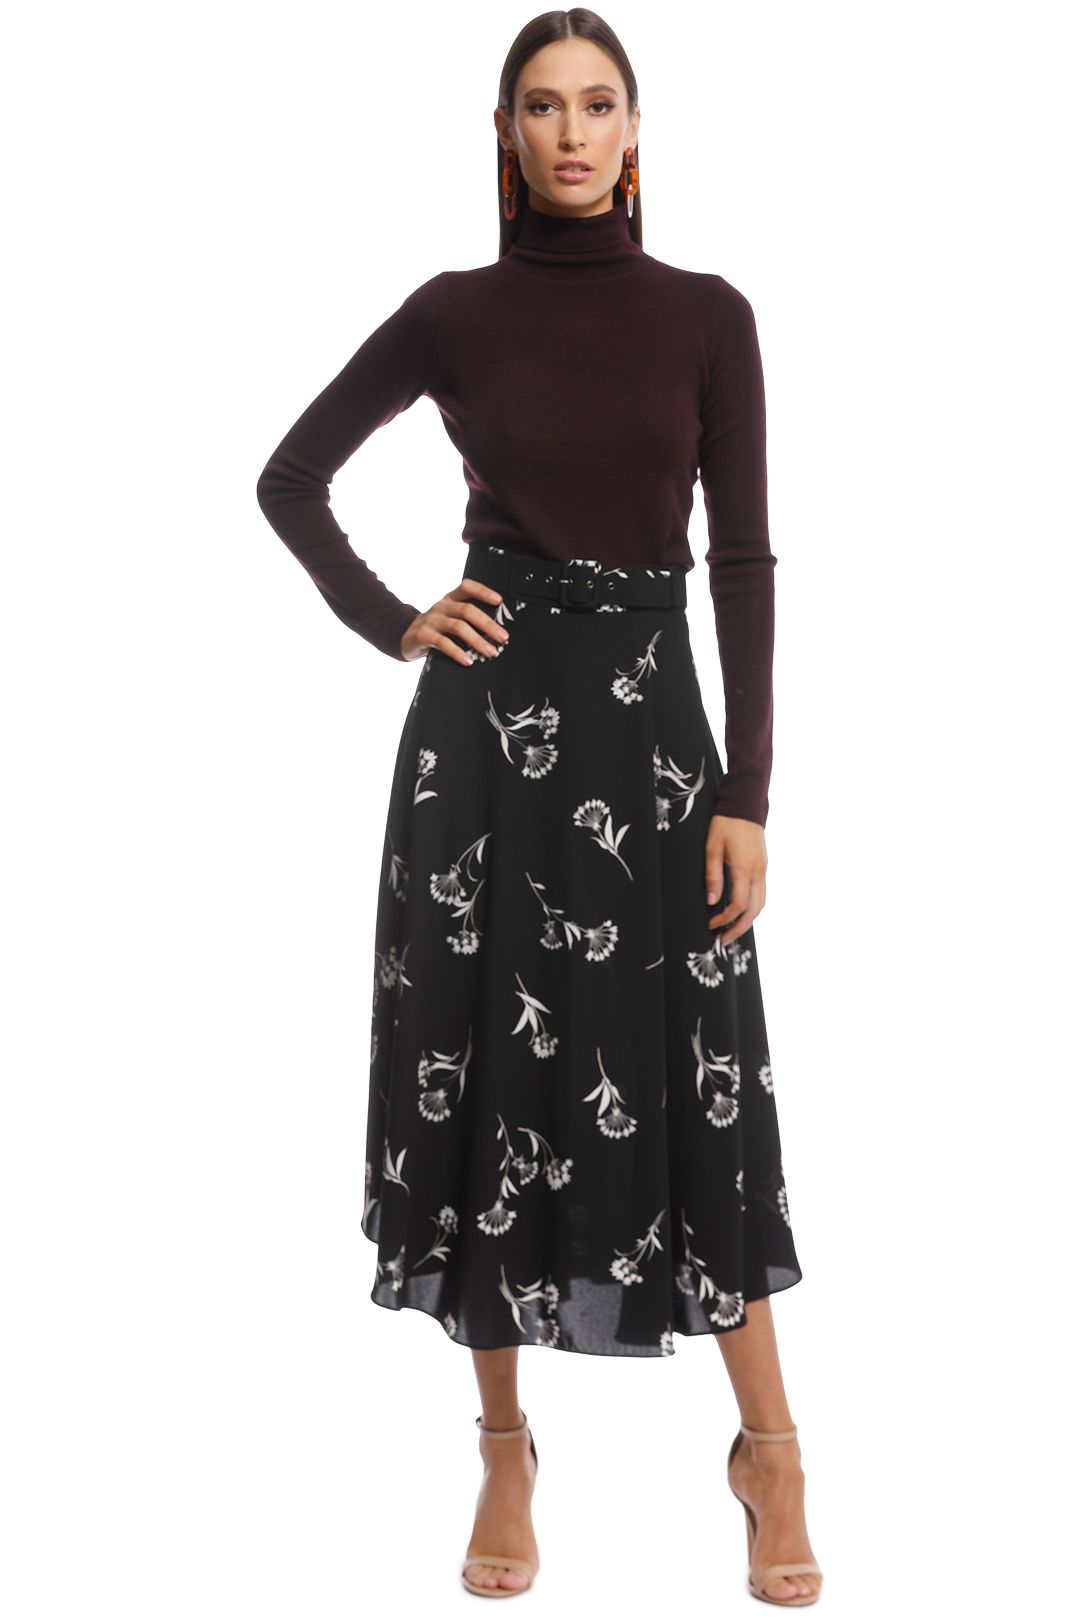 Veronika Maine - Fan Flowers Belted Skirt - Black Floral - Front